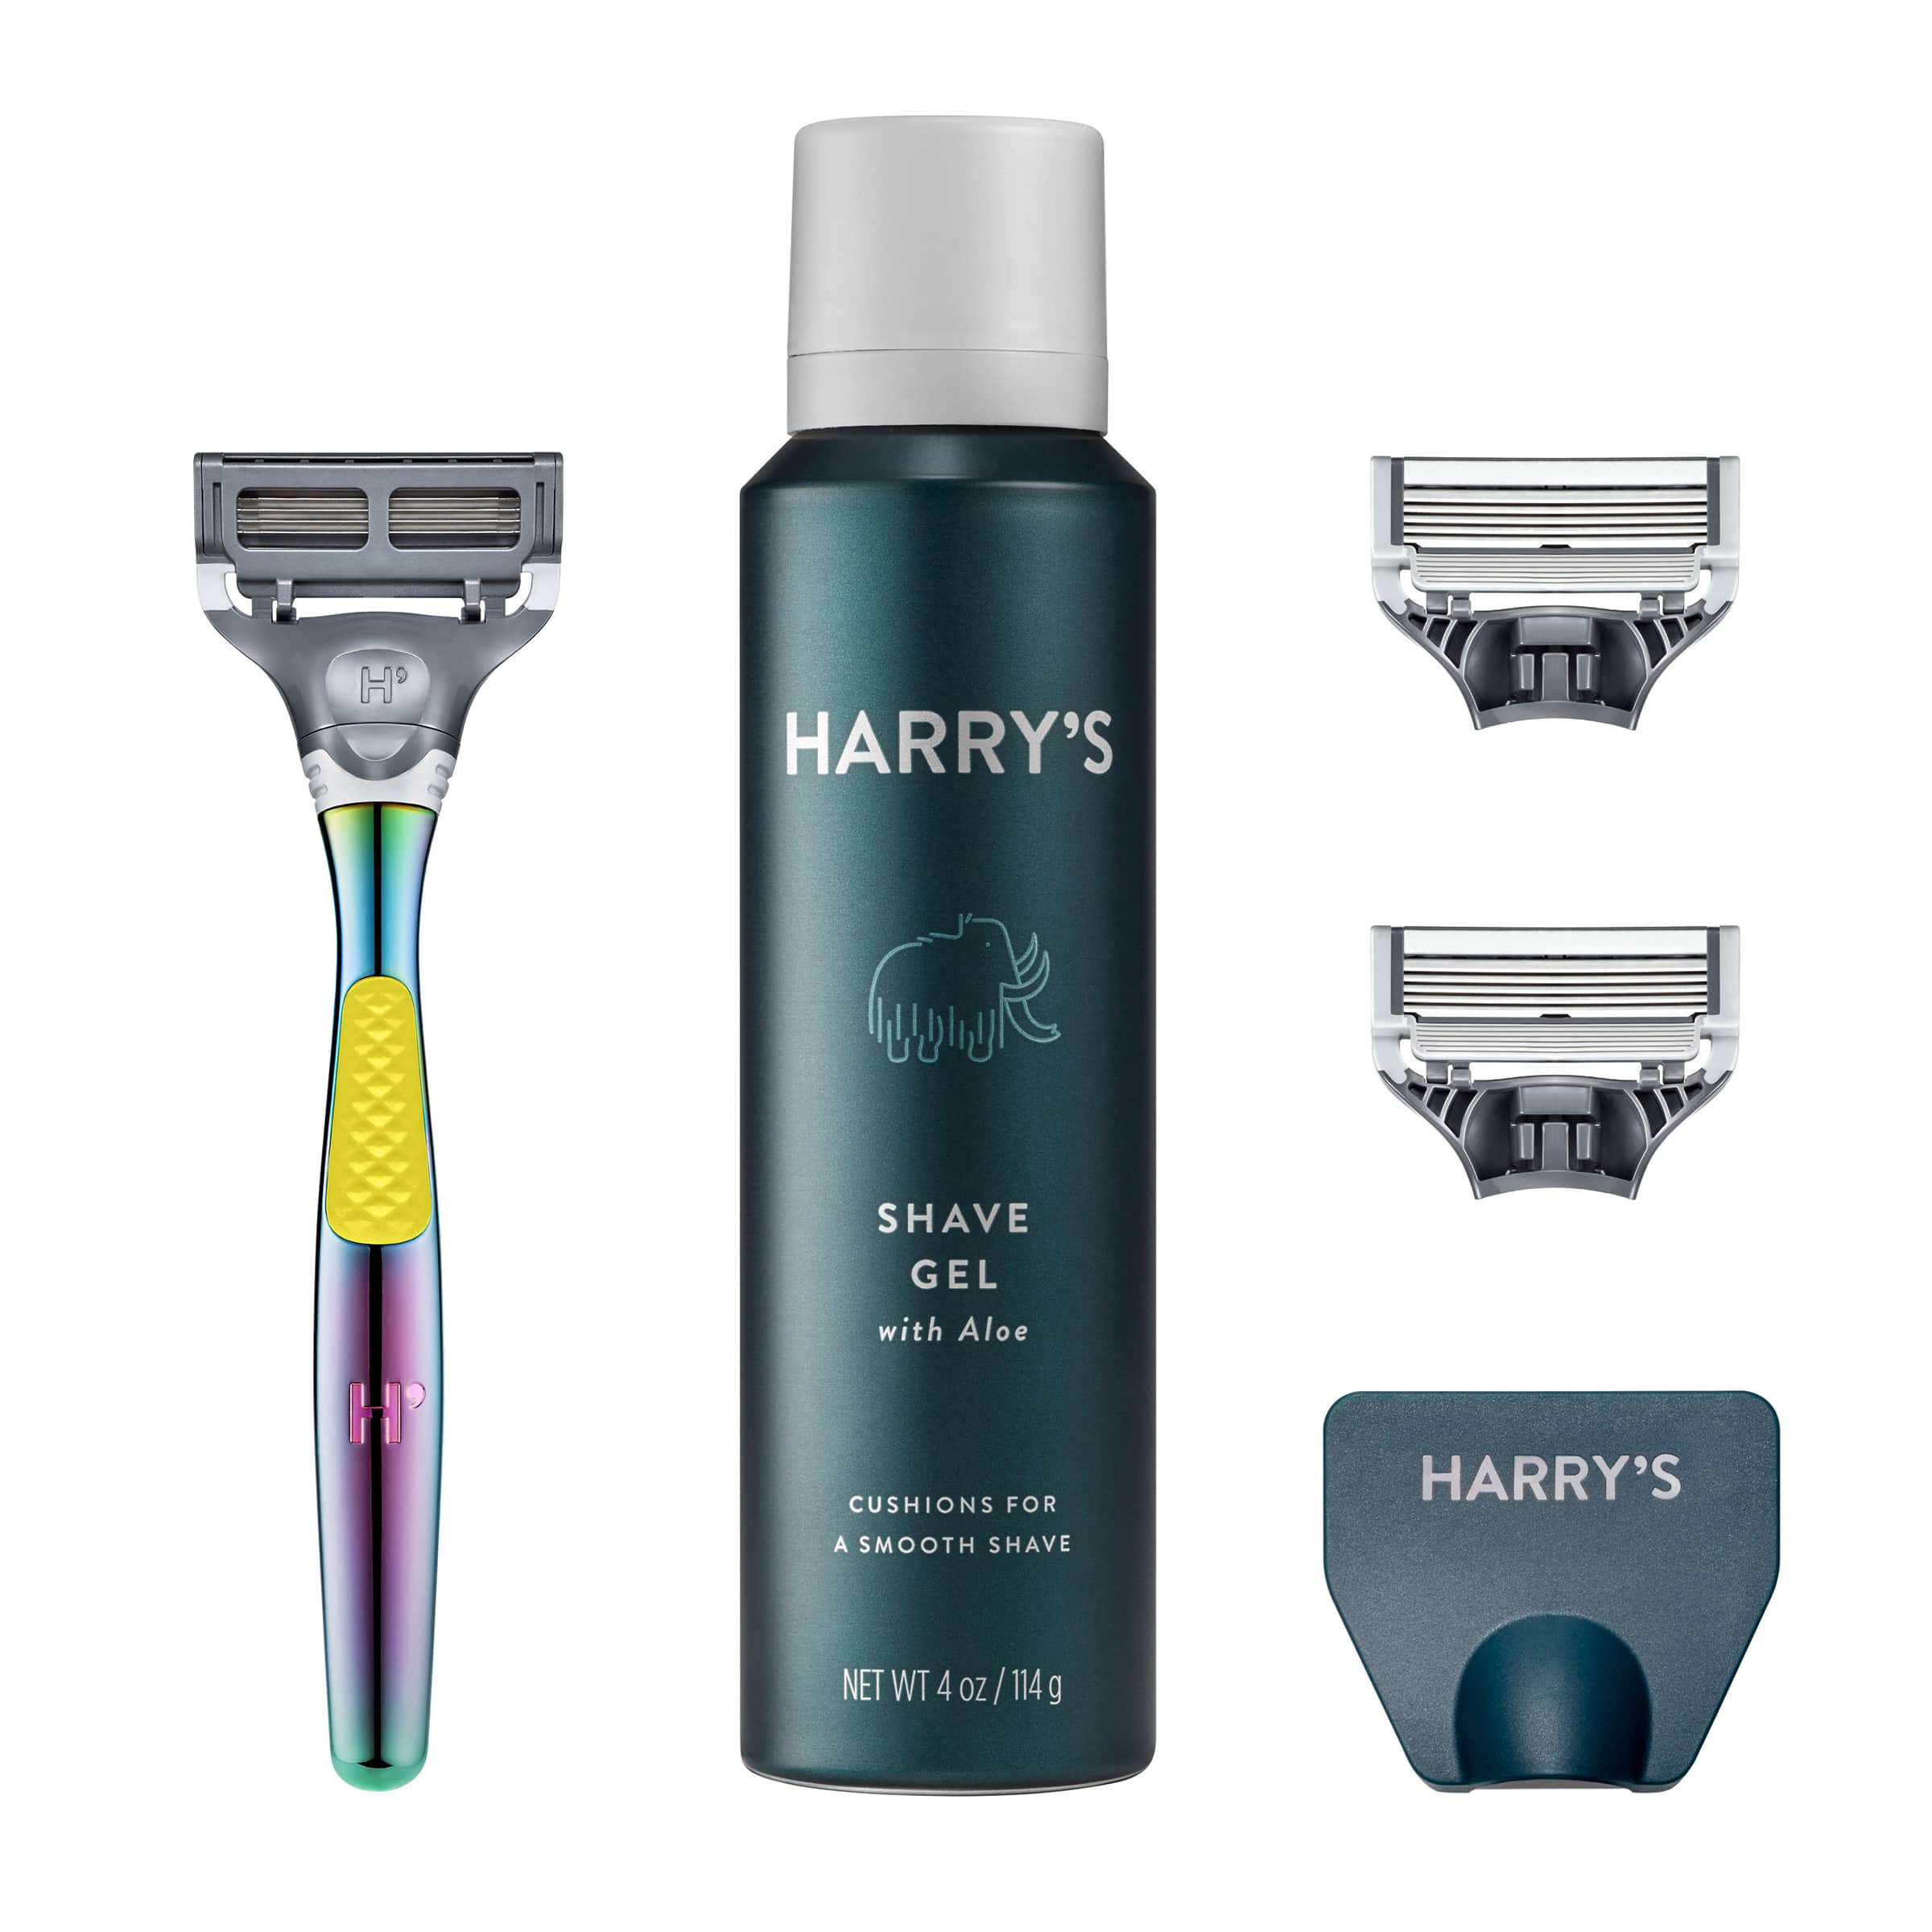 Harry's Pride Set with Pride Handle, 3 Razor Blade Refills, 4 Oz, Shaving Gel - image 2 of 5